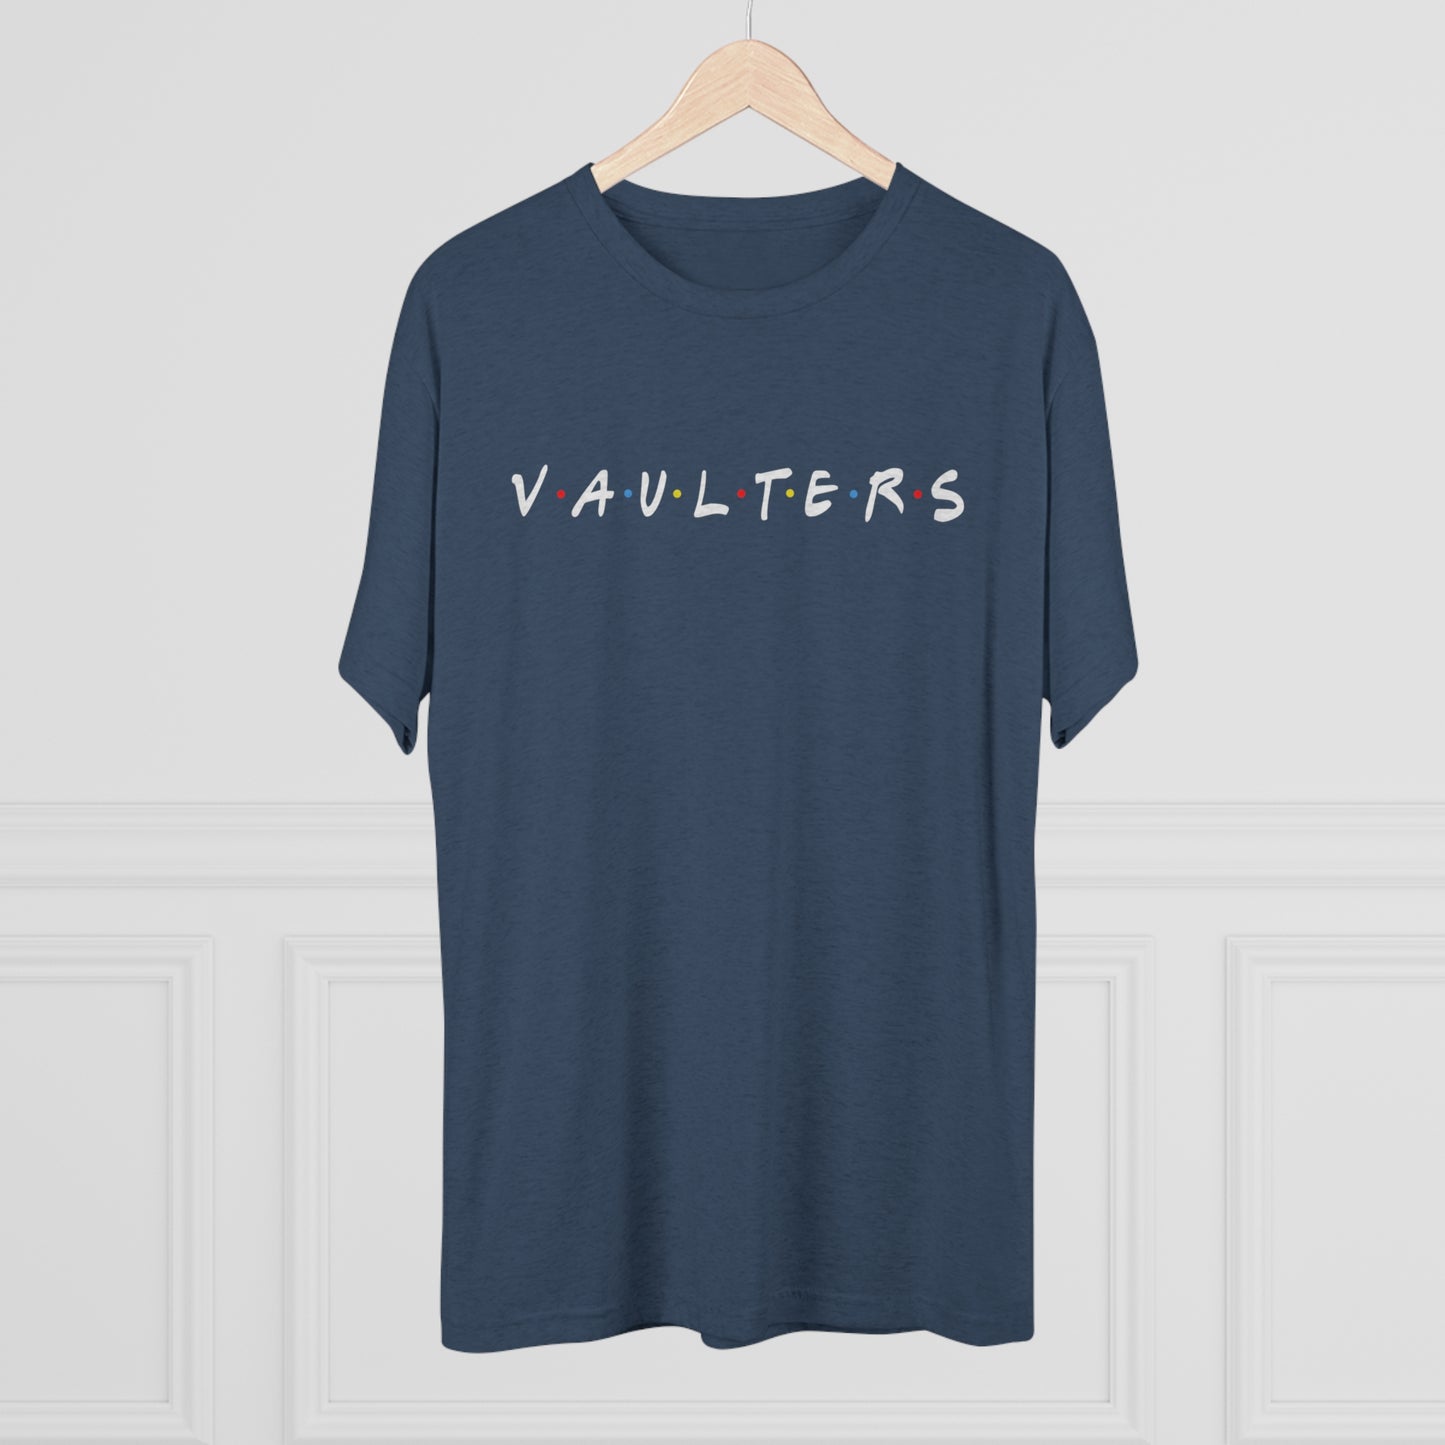 Vaulters - Tri-Blend Tee